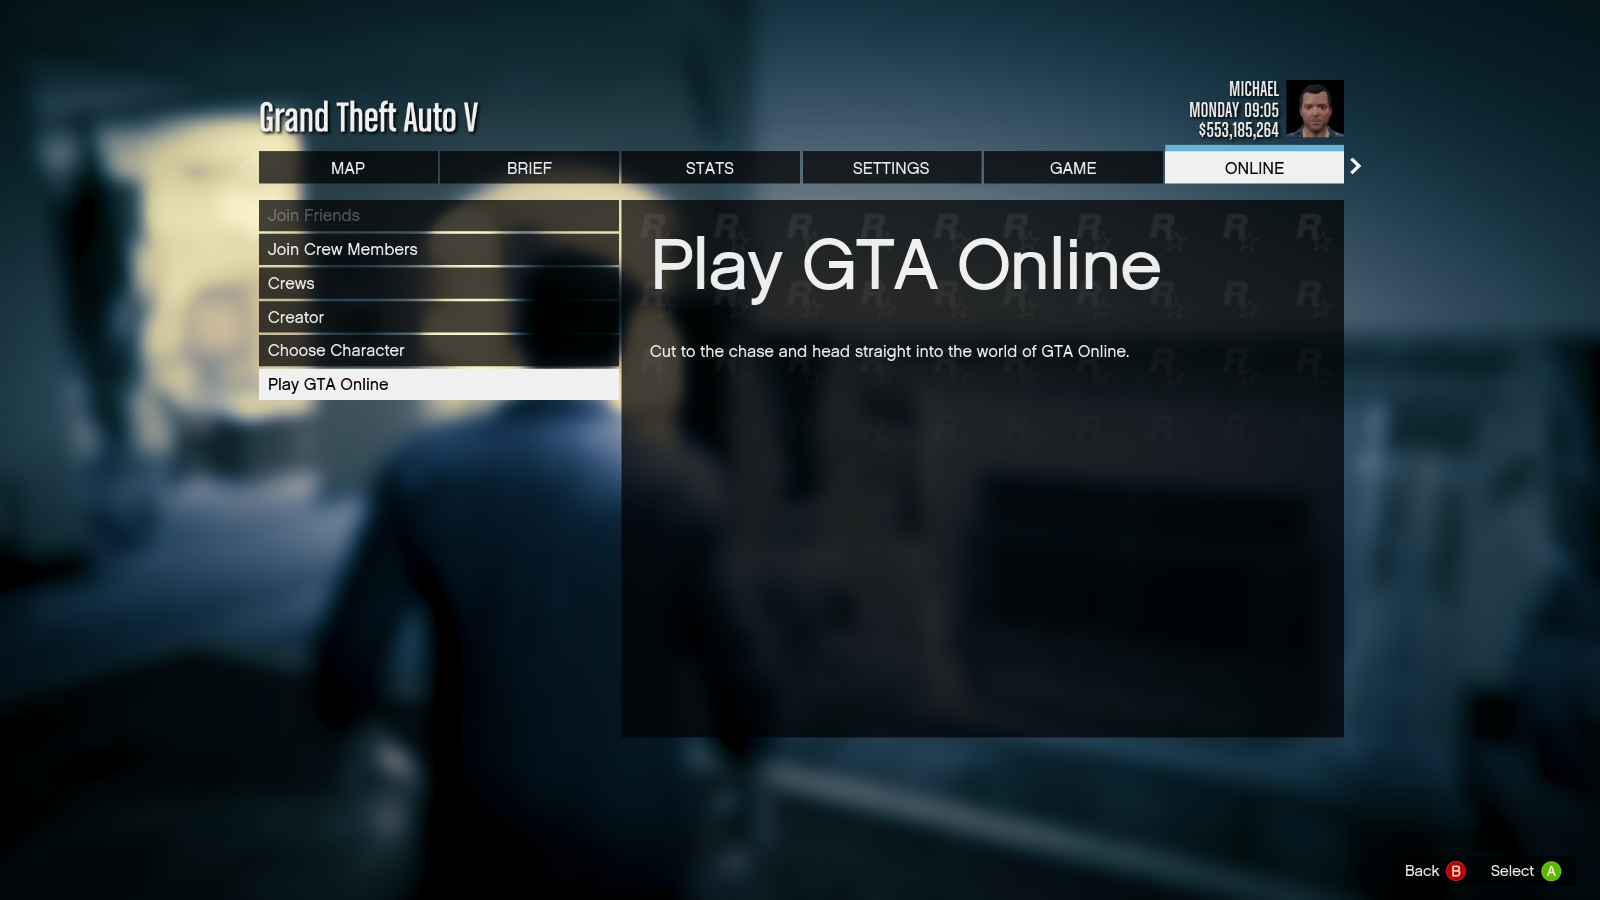 Choose &ldquo;Play GTA Online&rdquo;